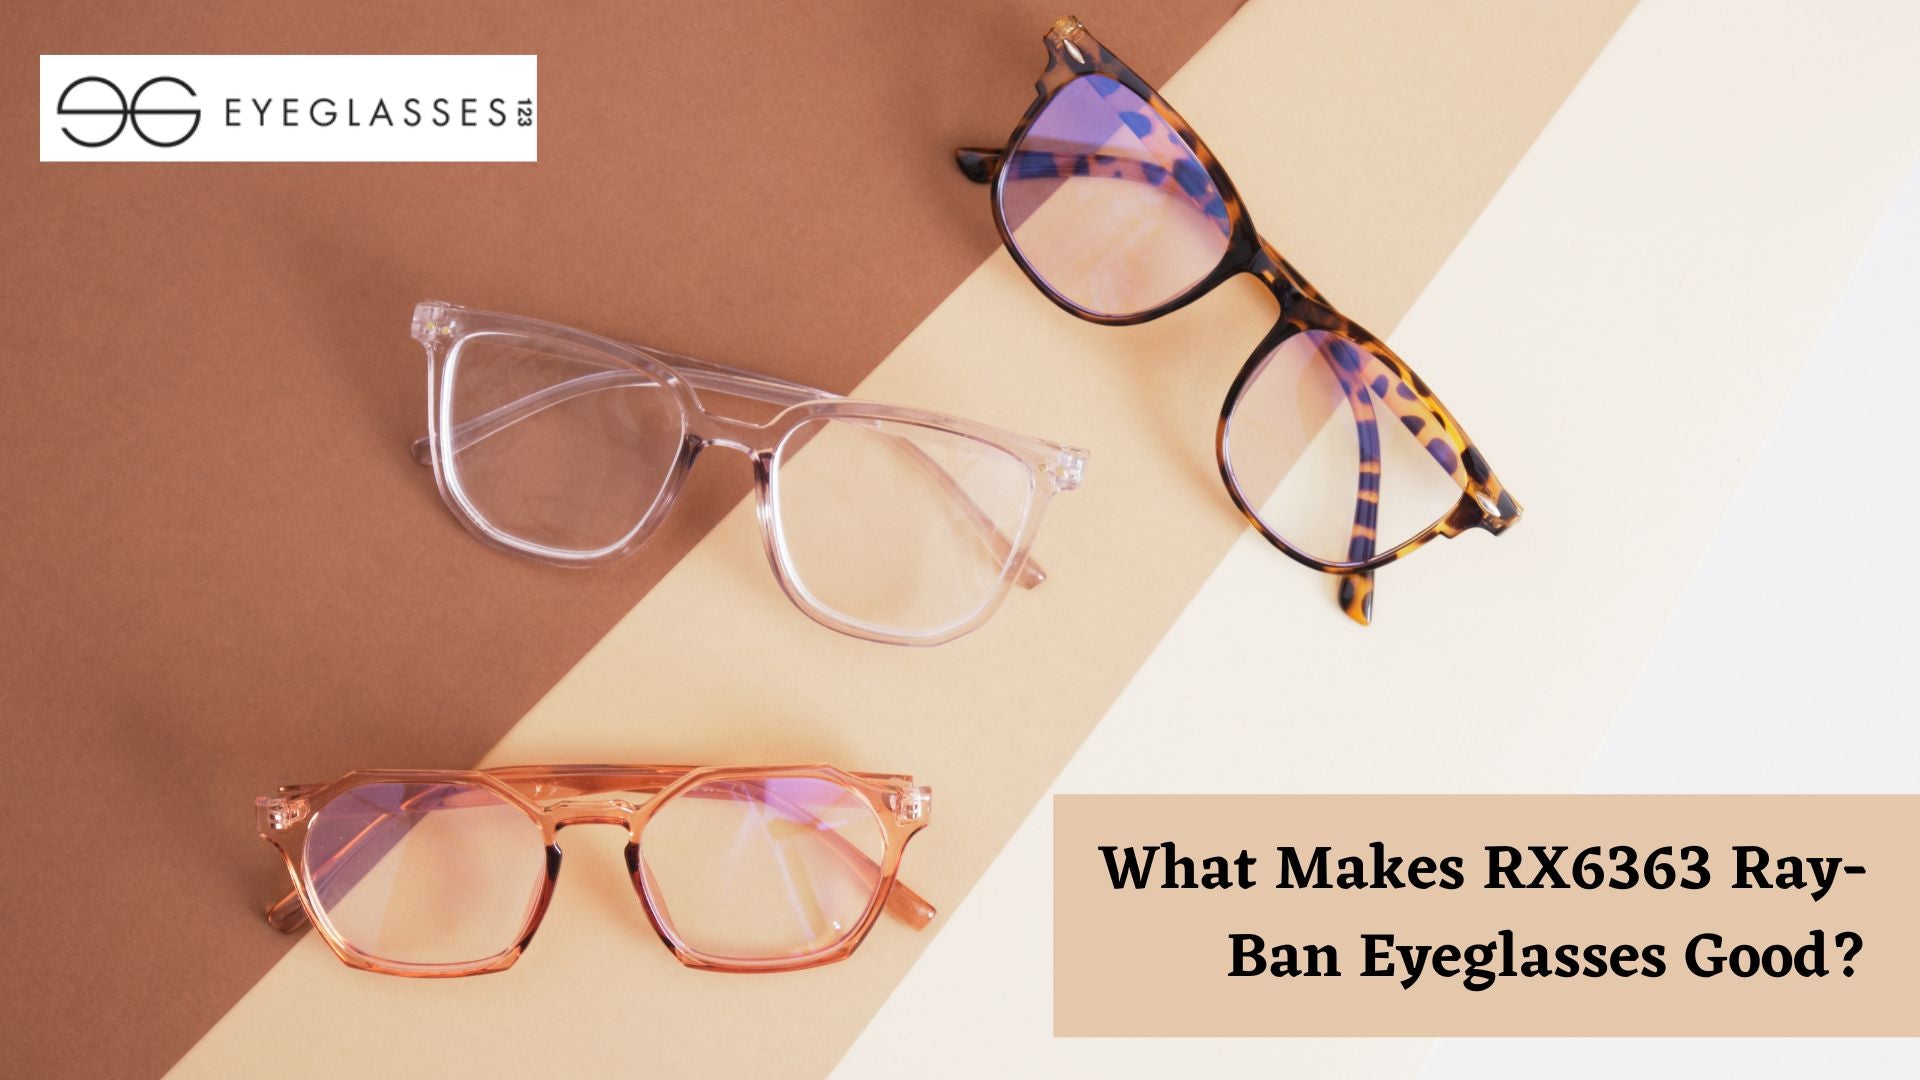 What Makes RX6363 Ray-Ban Eyeglasses Good?